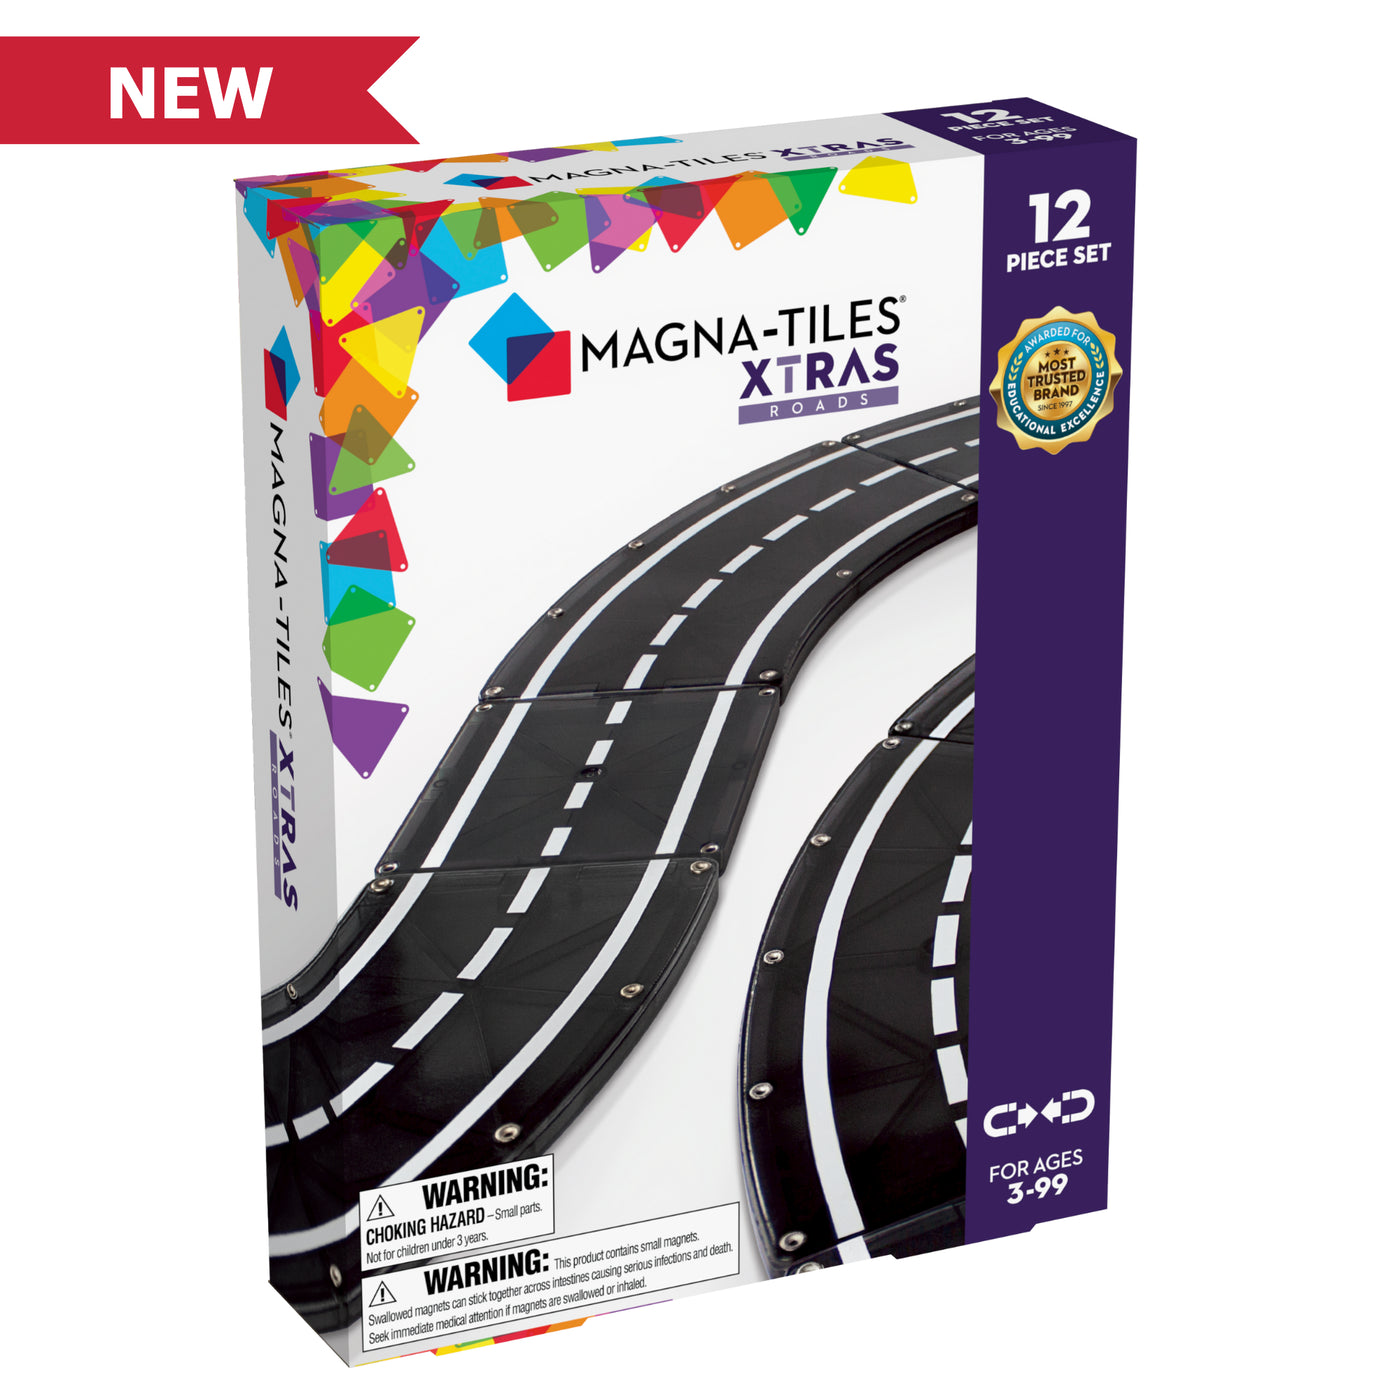 Magnatiles XTRAS: Roads 12-Piece Set